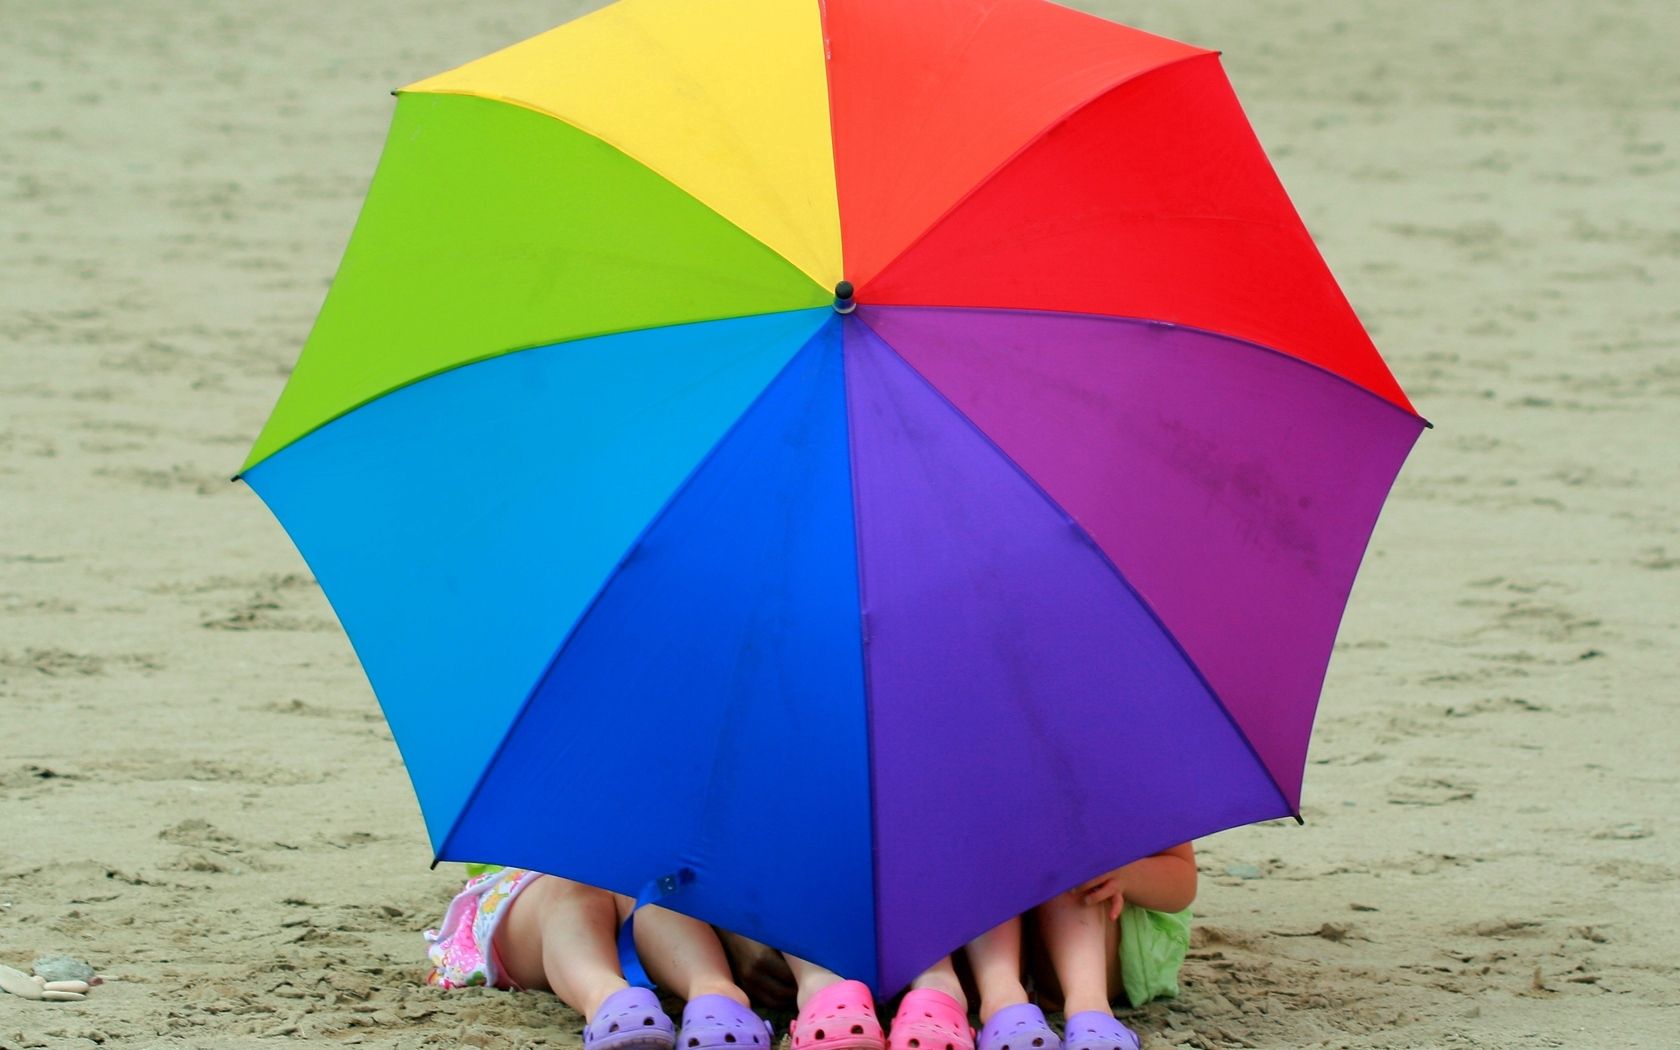 girls, nature, children, beach, summer, miscellanea, miscellaneous, legs, color, umbrella, mood, child, coloured, moods, footwear